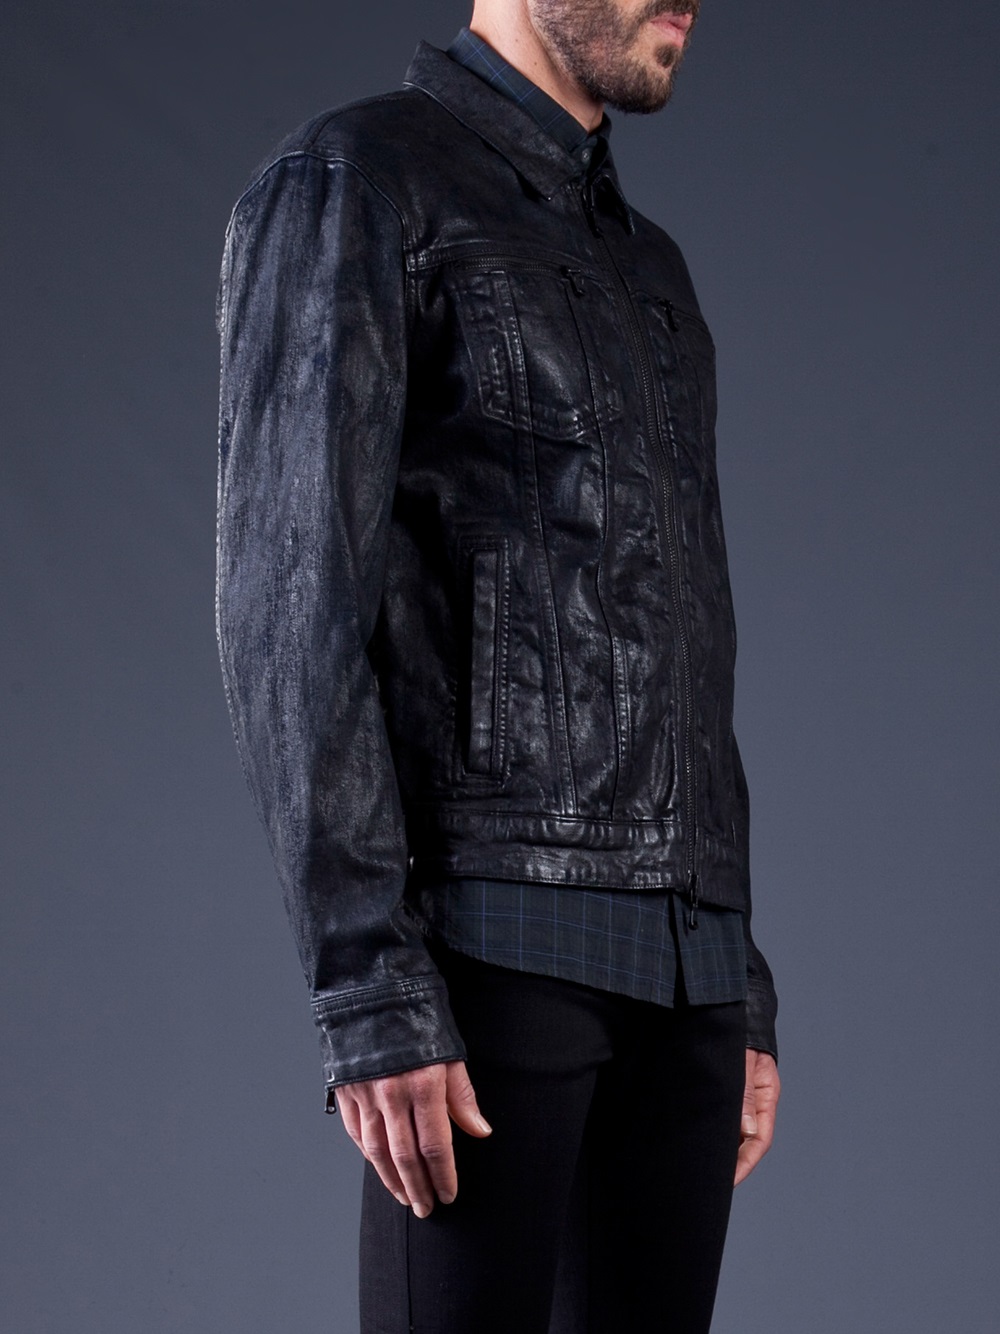 John Varvatos Men's Size 52 Leather Jacket | Leather jacket shopping,  Leather jacket, Vintage denim jacket